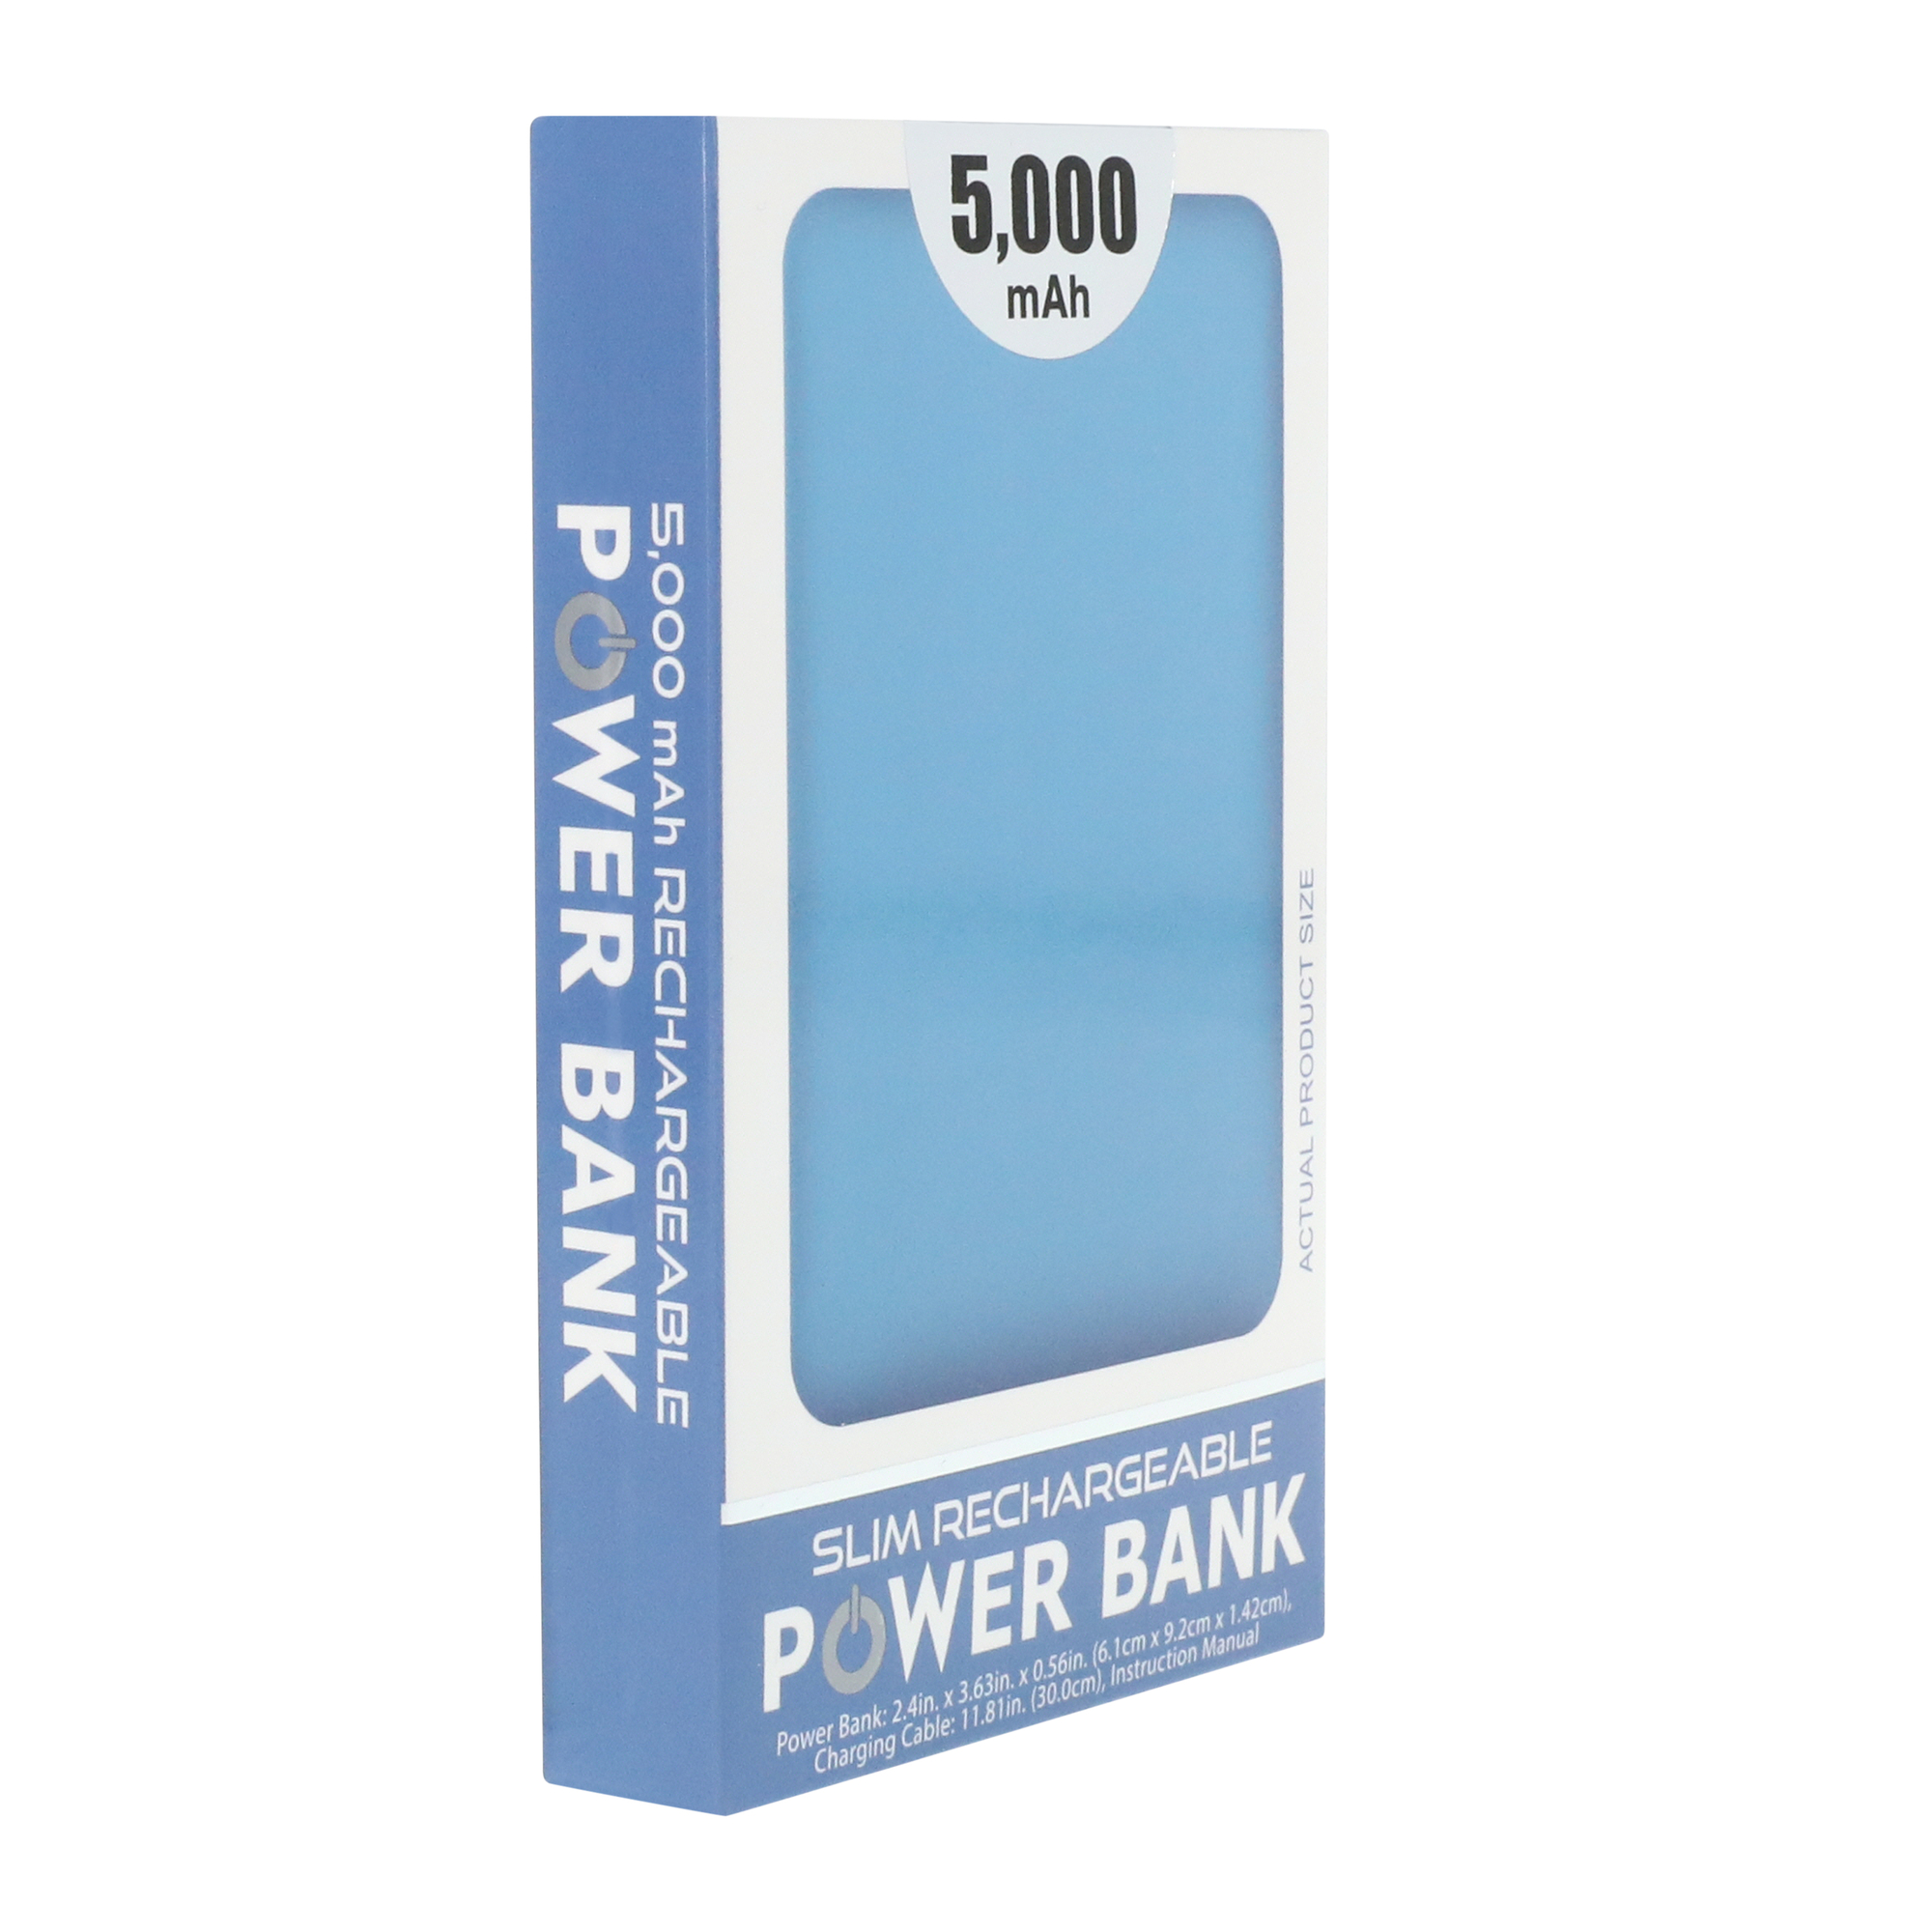 Slim Rechargeable 5000mAh Power Bank, Five Below